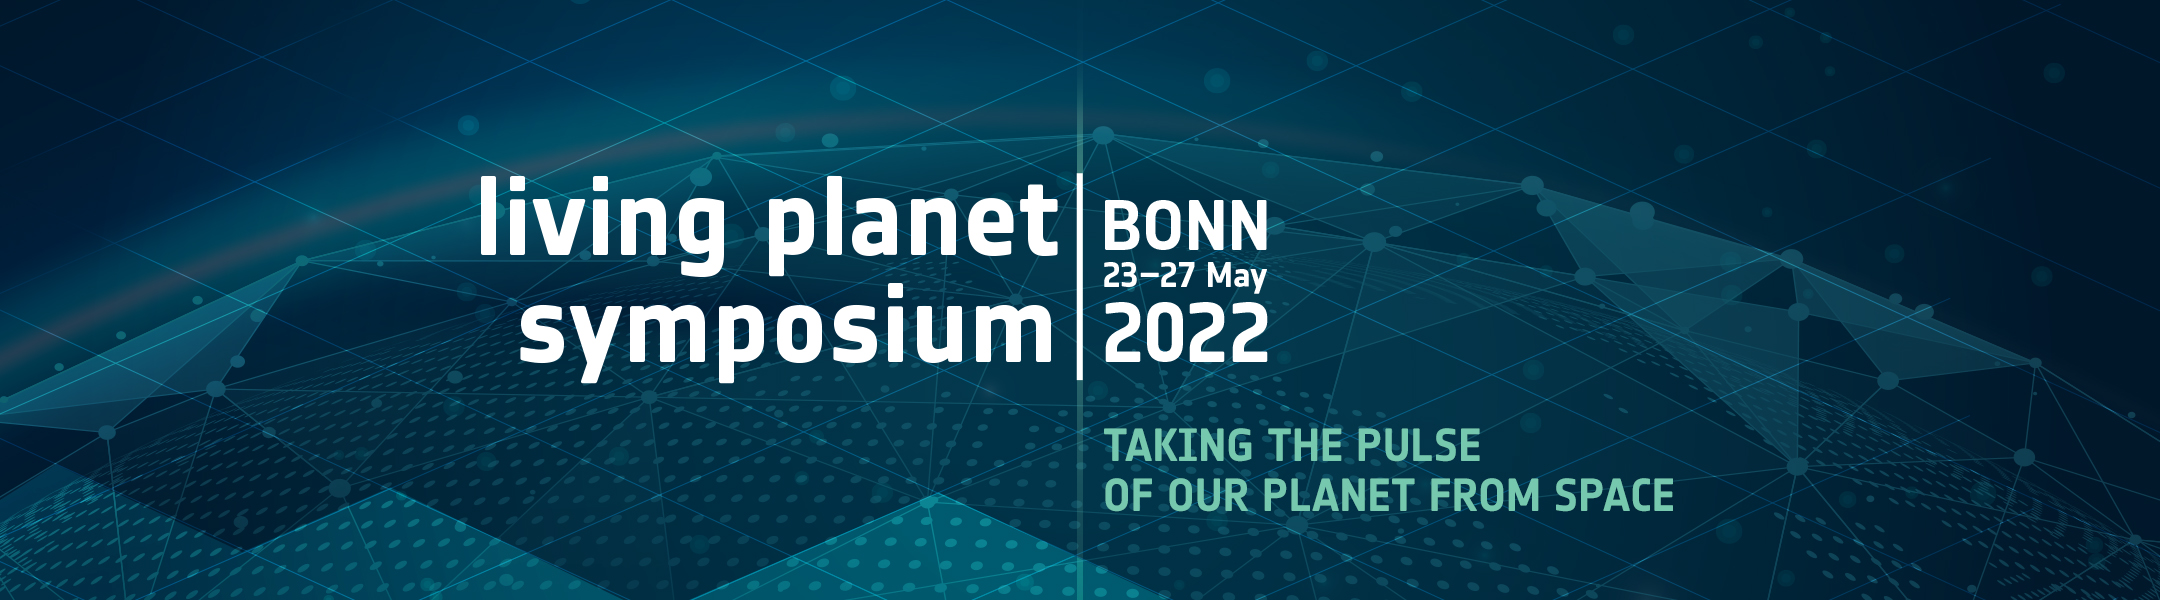 Living Planet Symposium | BONN 23-27 May 2022